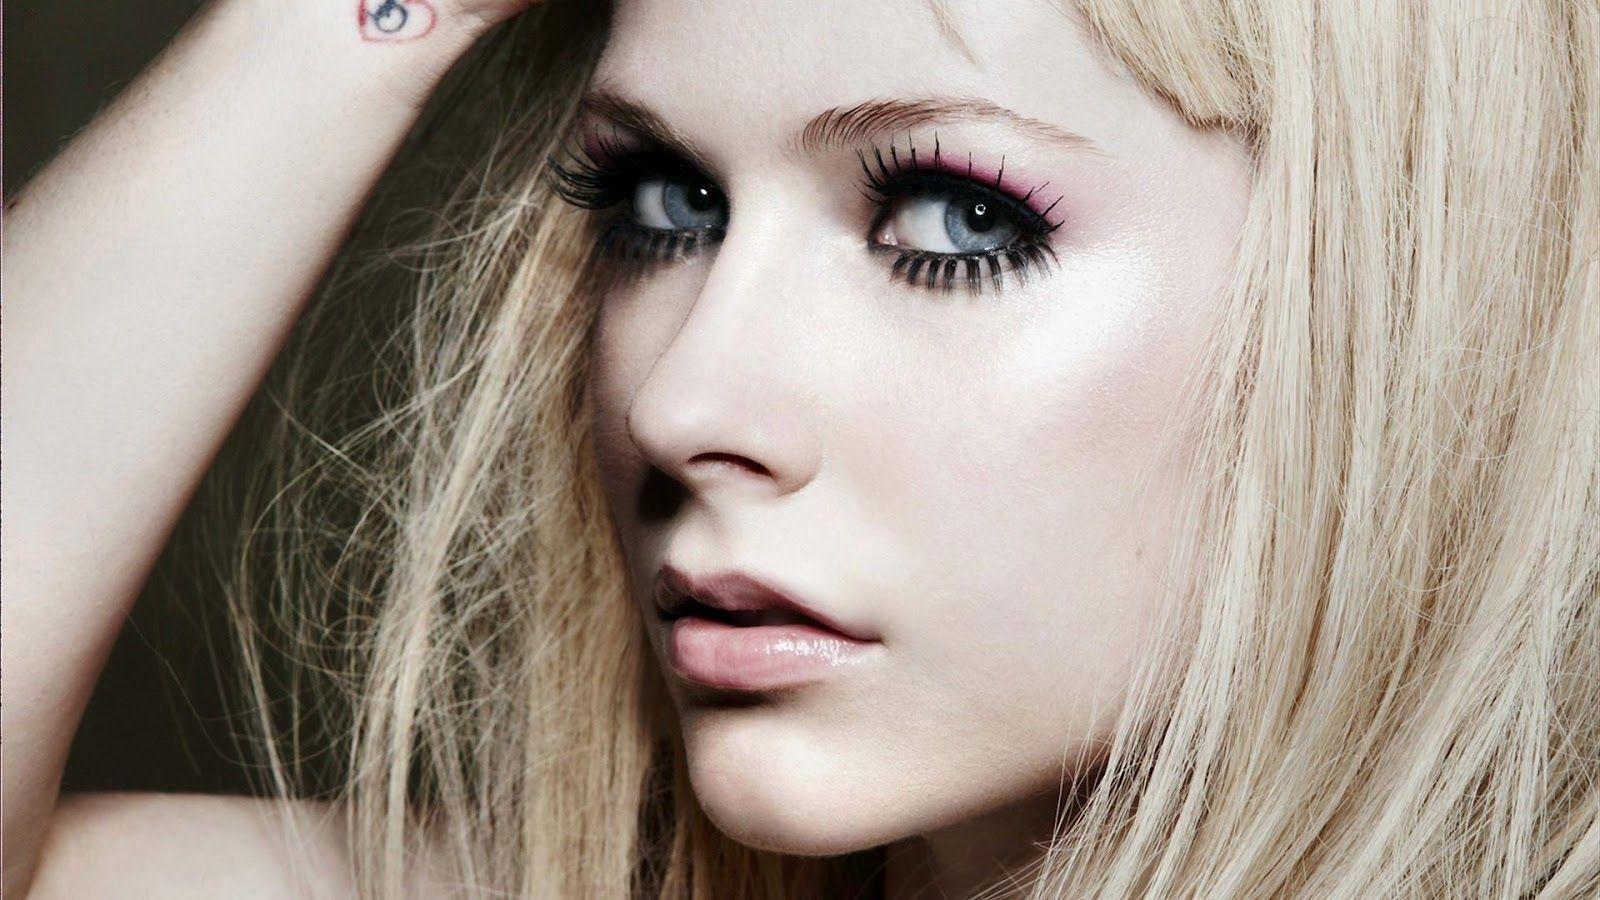 Avril Lavigne Theme and Wallpaper for Windows 7